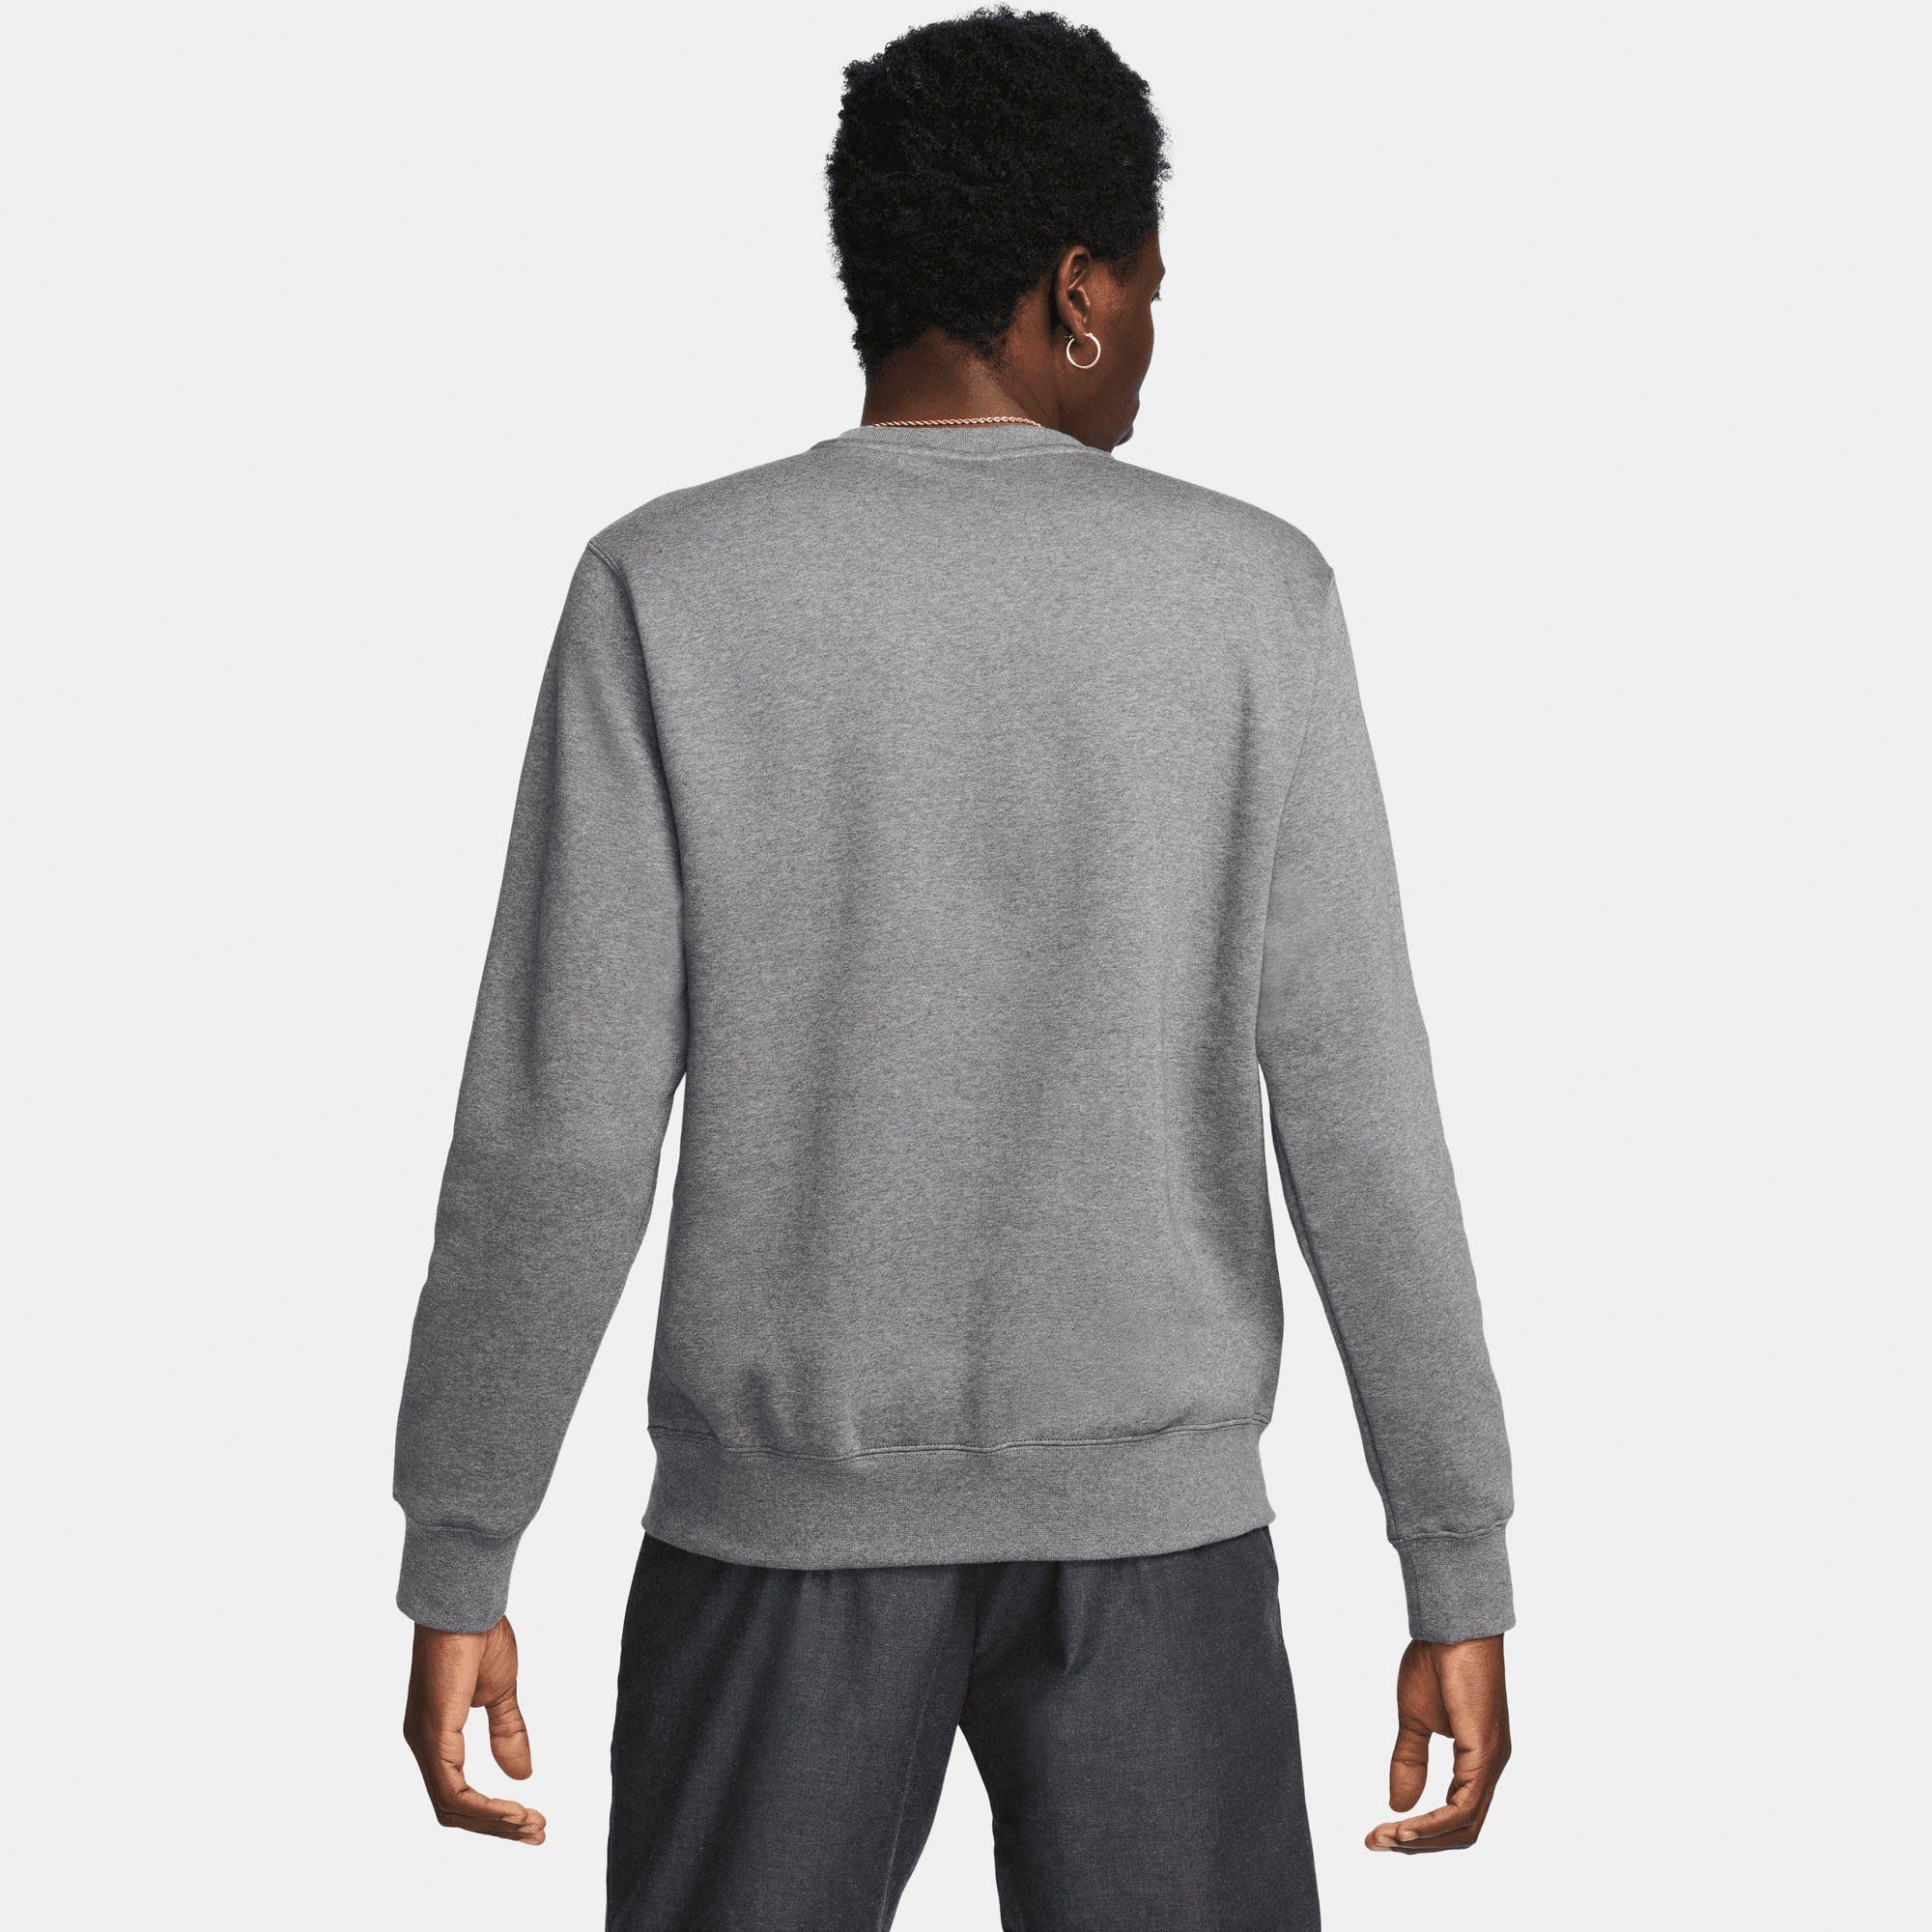 Nike Sportswear Sweatshirt Club Fleece Graphic Crew HEATHR CHARCOAL Men's